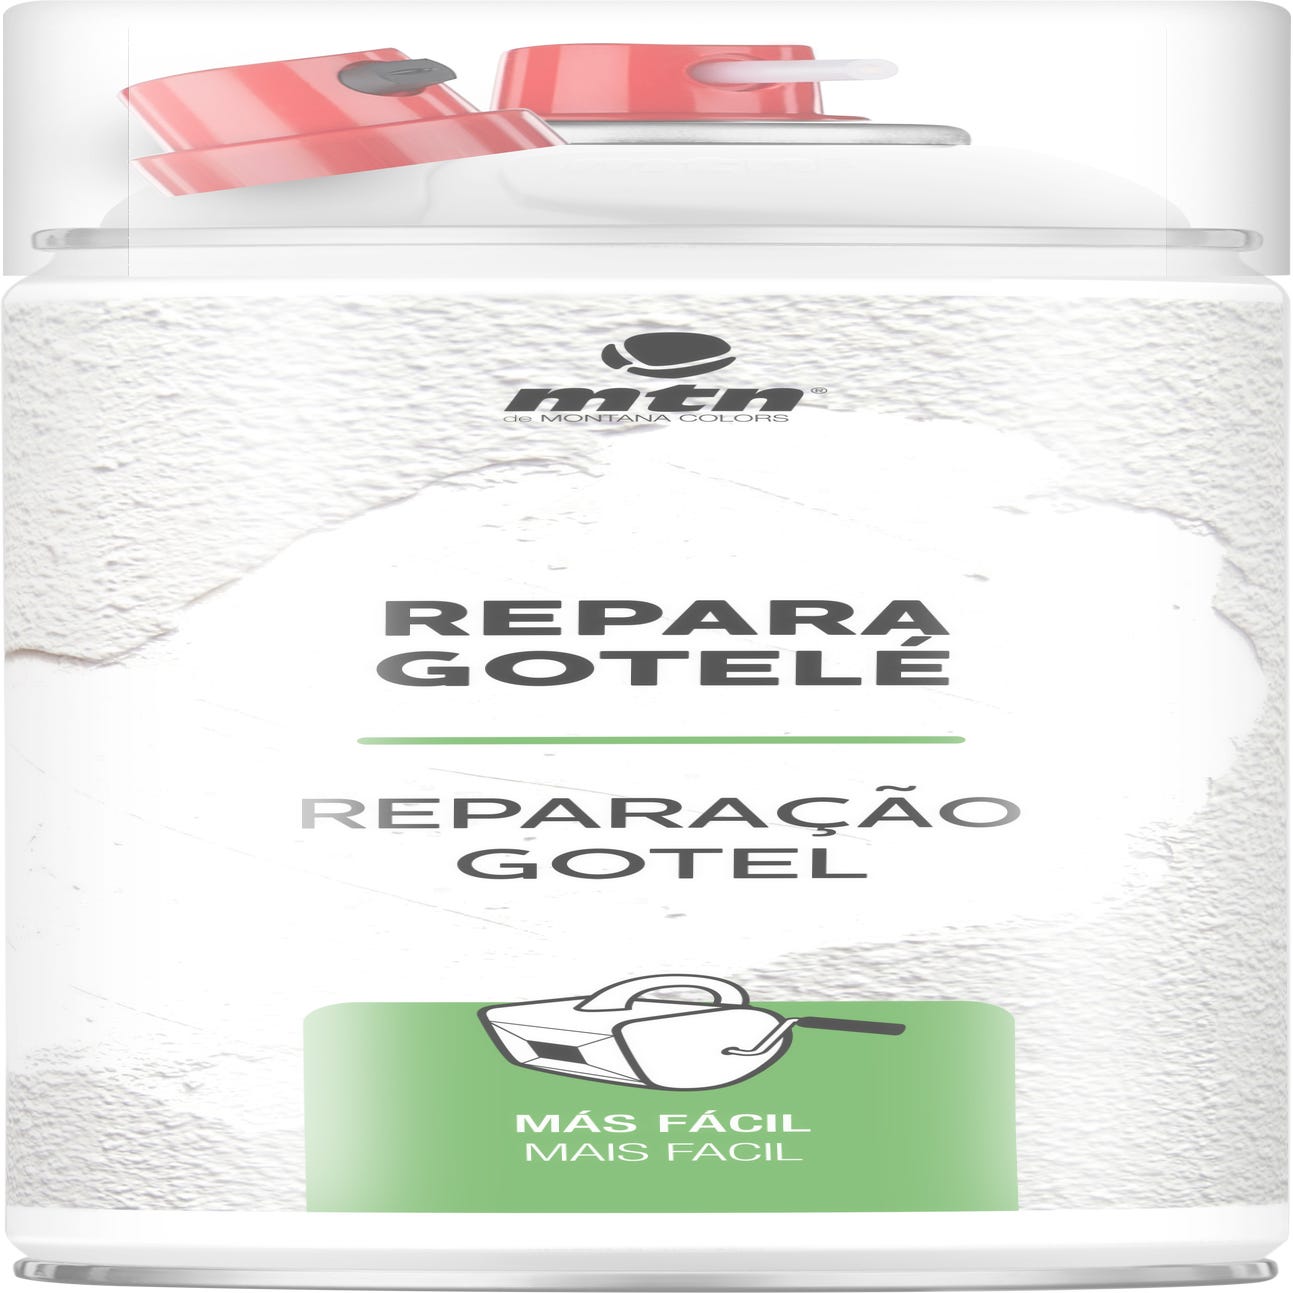 ▷ Comprar Spray repara gotele 500ml Motip (promo 400ml + 25% gratis)